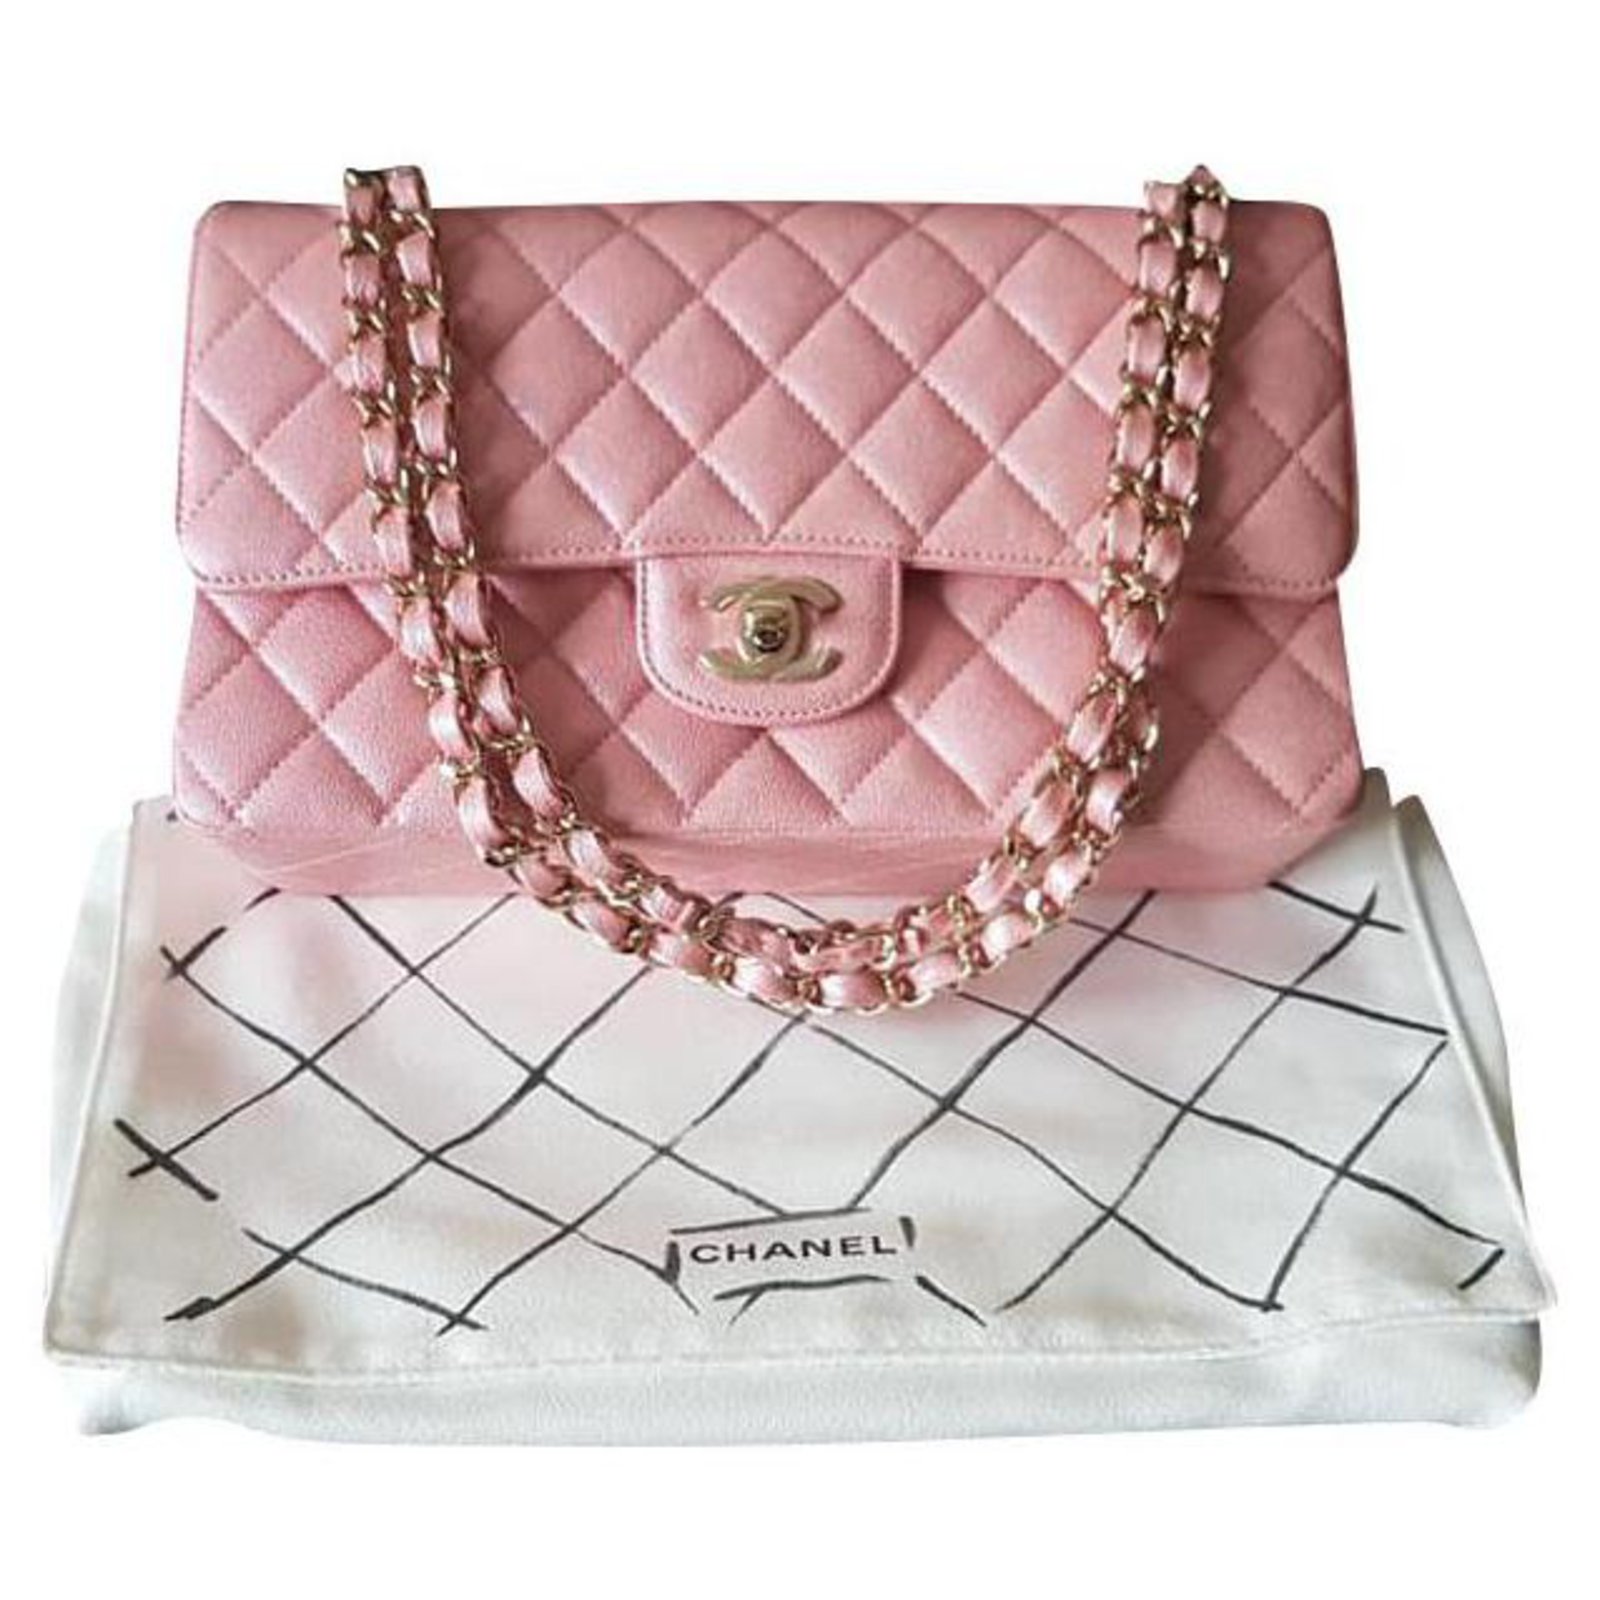 chanel handbags pink new